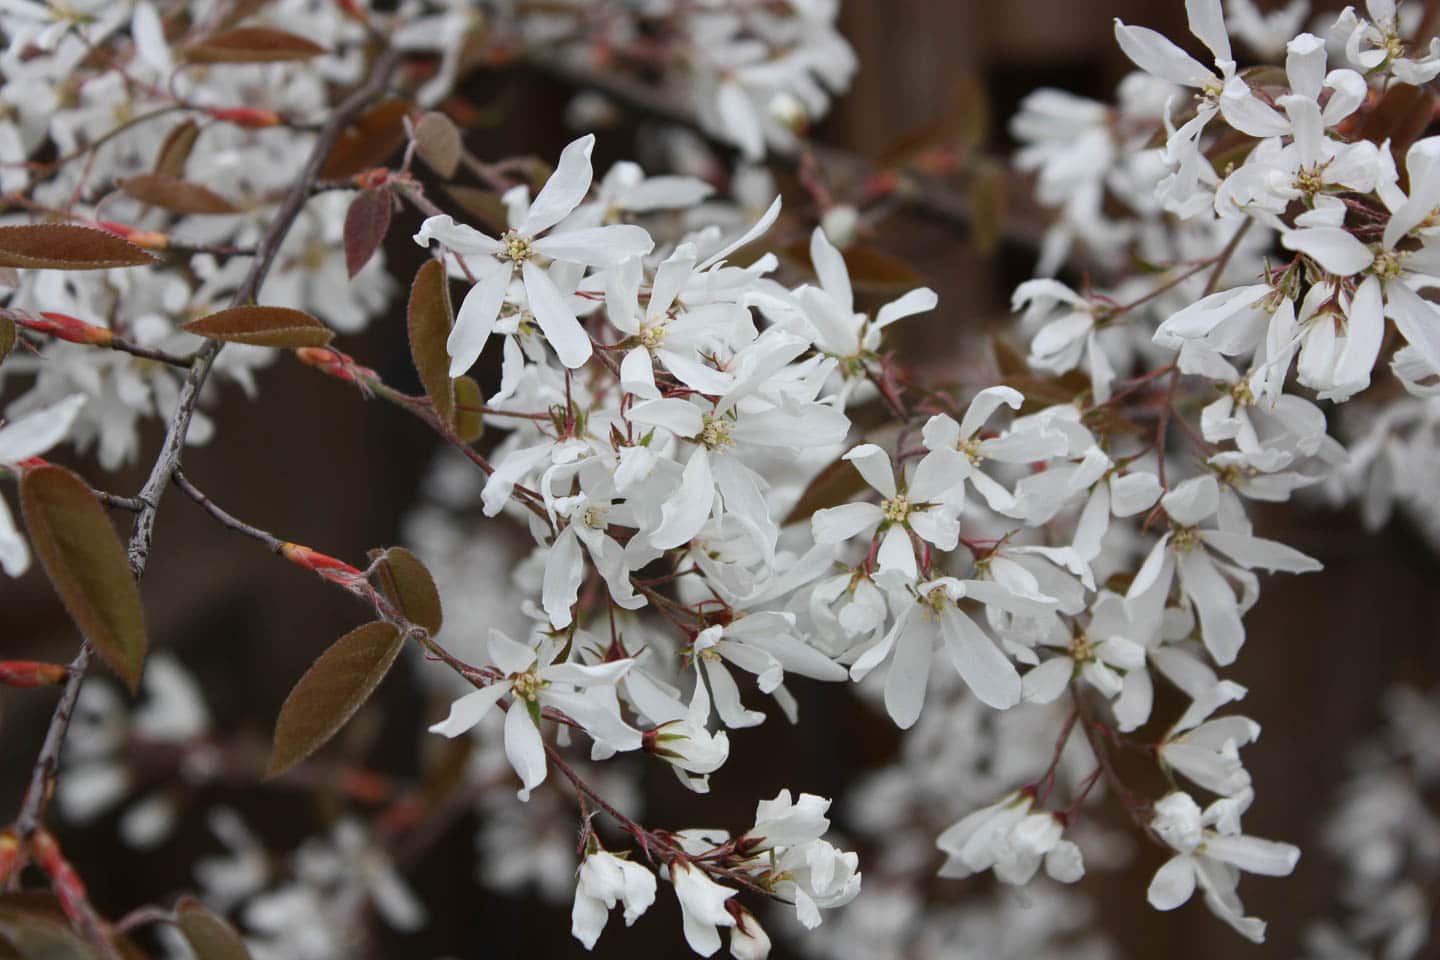 Saskatoon serviceberry (Amelanchiea) white flowers in early spring